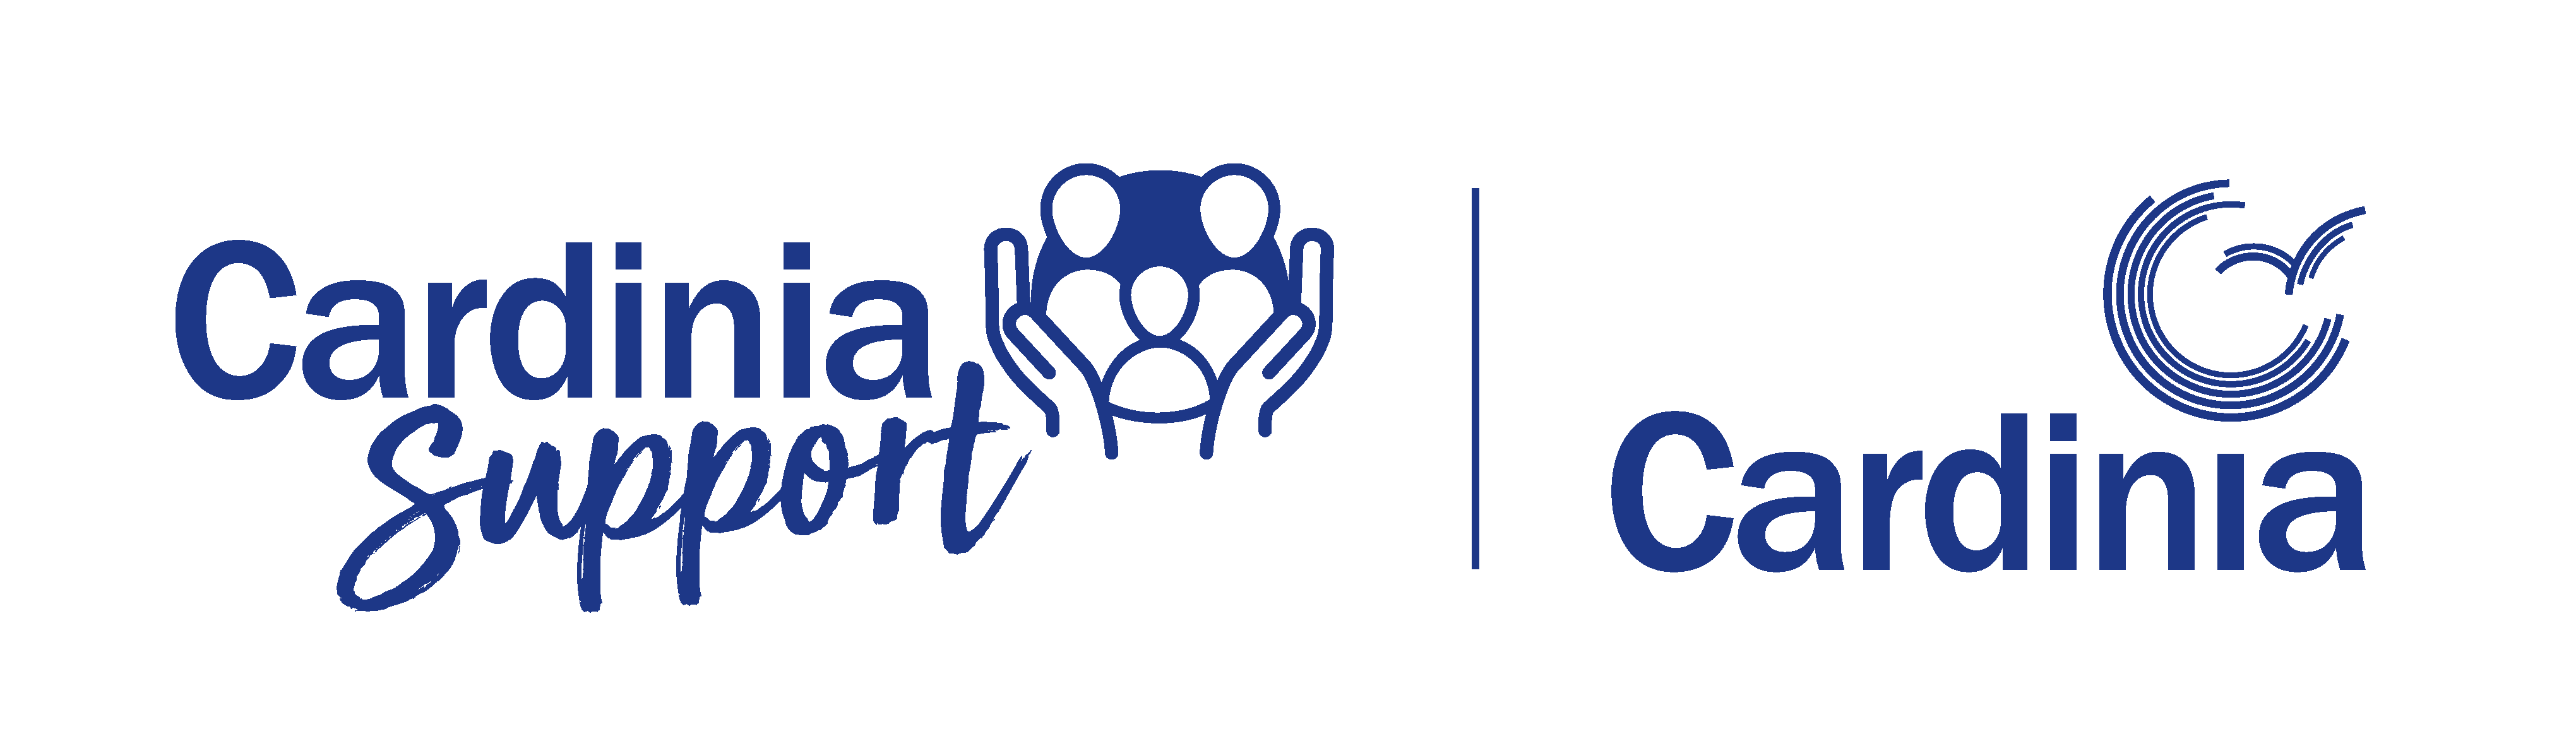 Cardinia Support logo, which also includes the Cardinia Shire Council logo